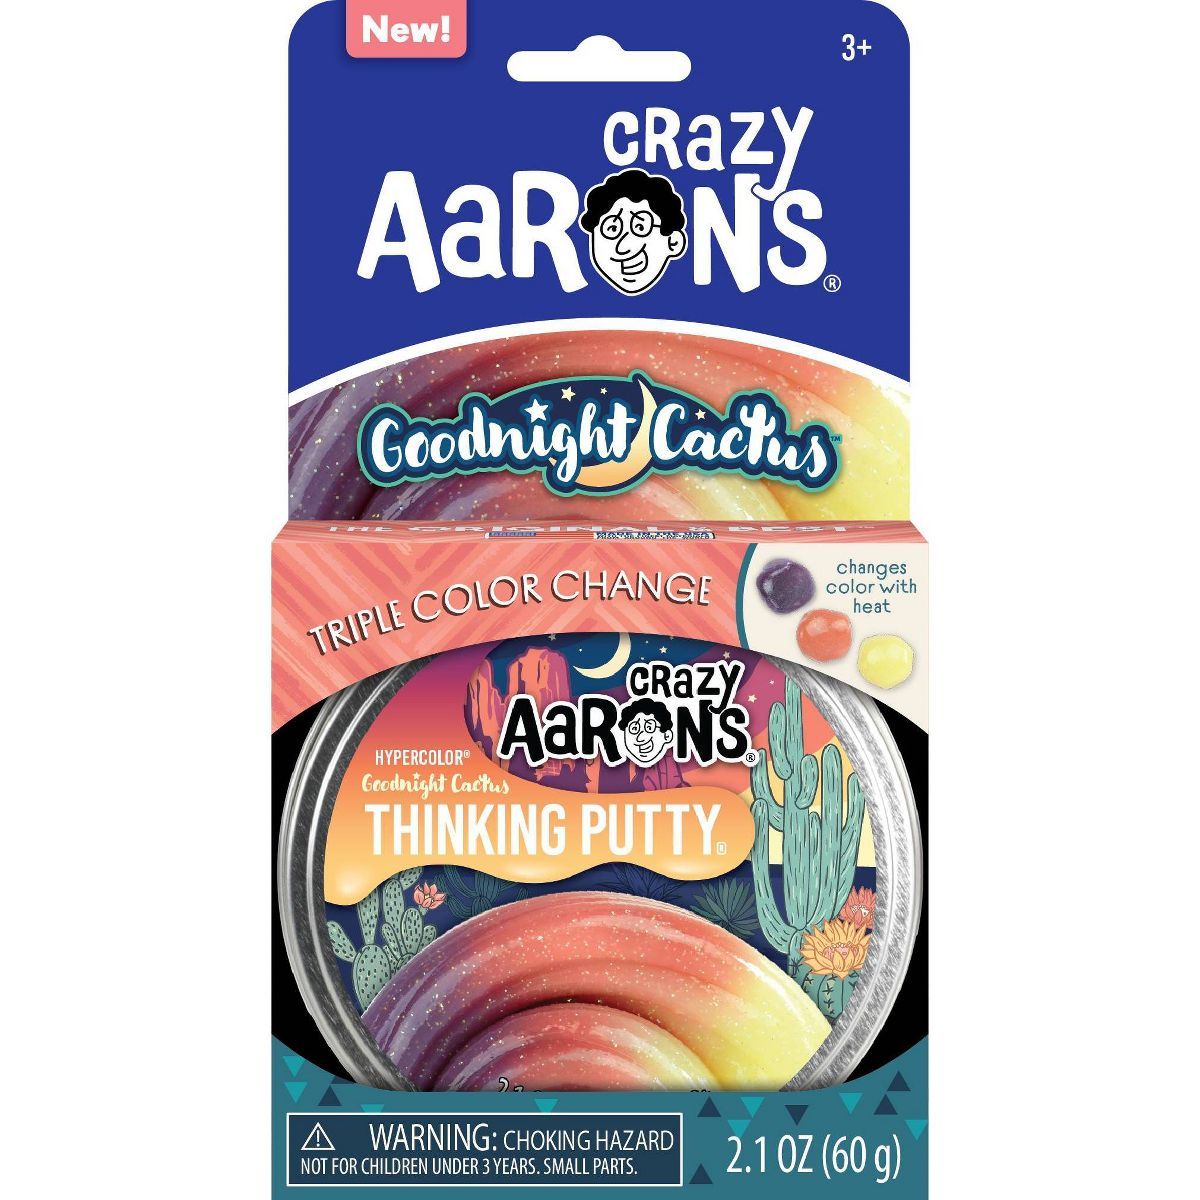 Crazy Aaron's Goodnight Cactus Putty | Target